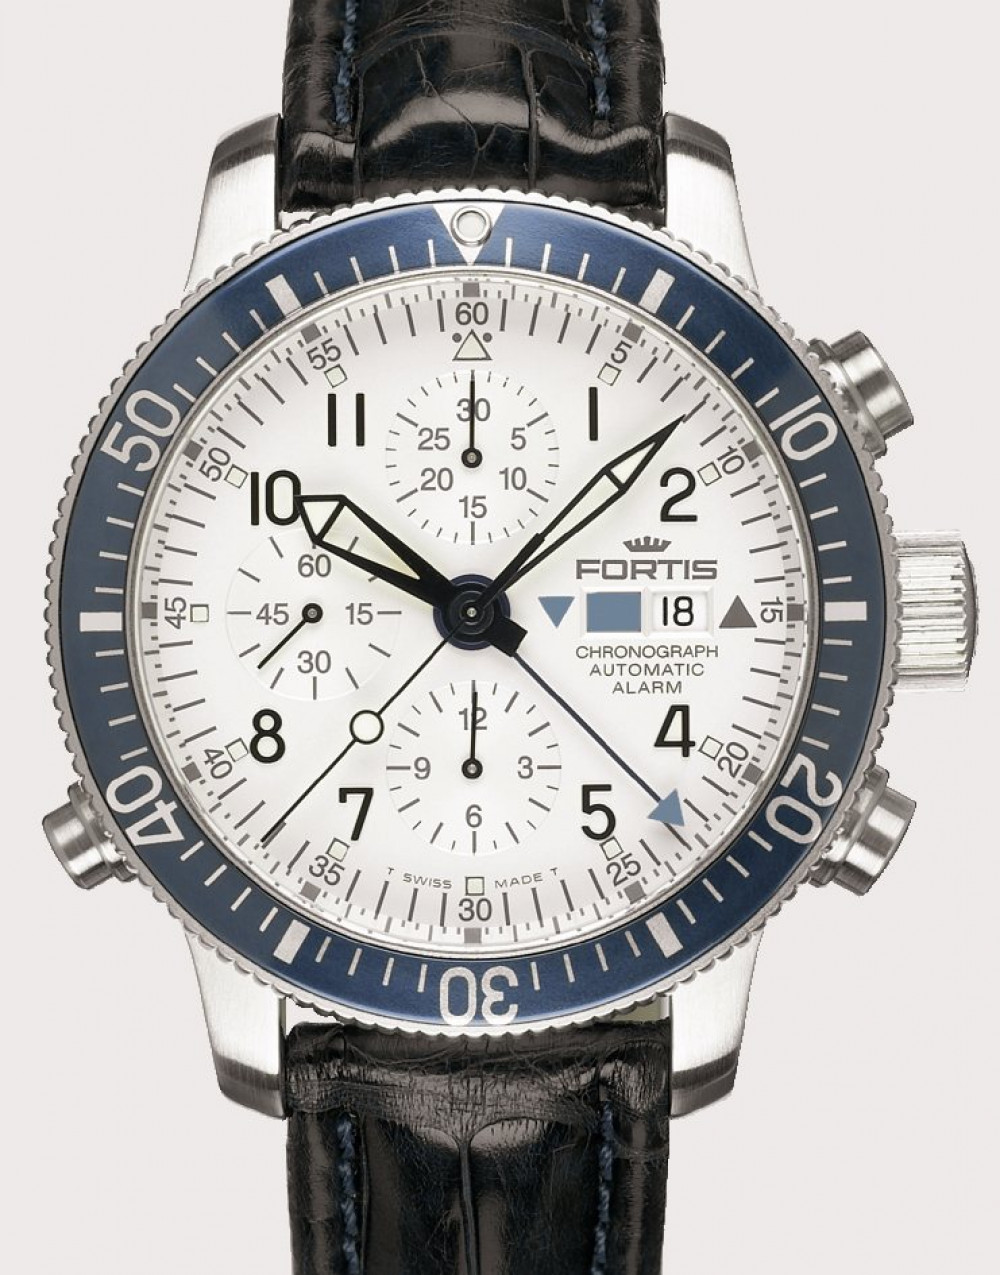 Zegarek firmy Fortis, model B-42 Diver Chronograph Alarm